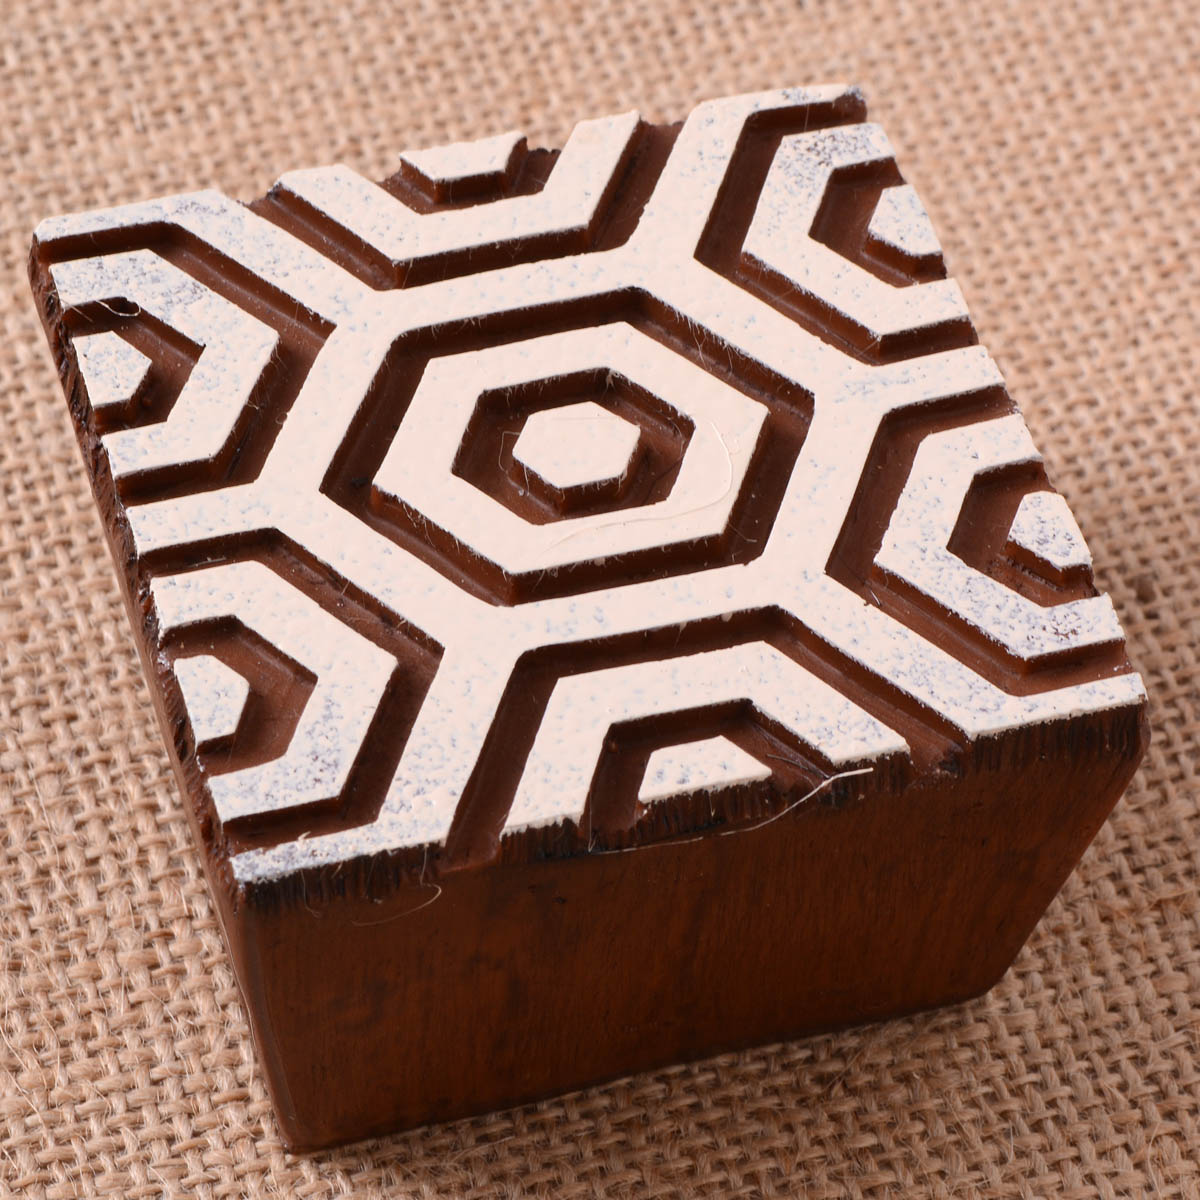 Fabric Creations™ Block Printing Stamps - Medium - Hex Honeycomb